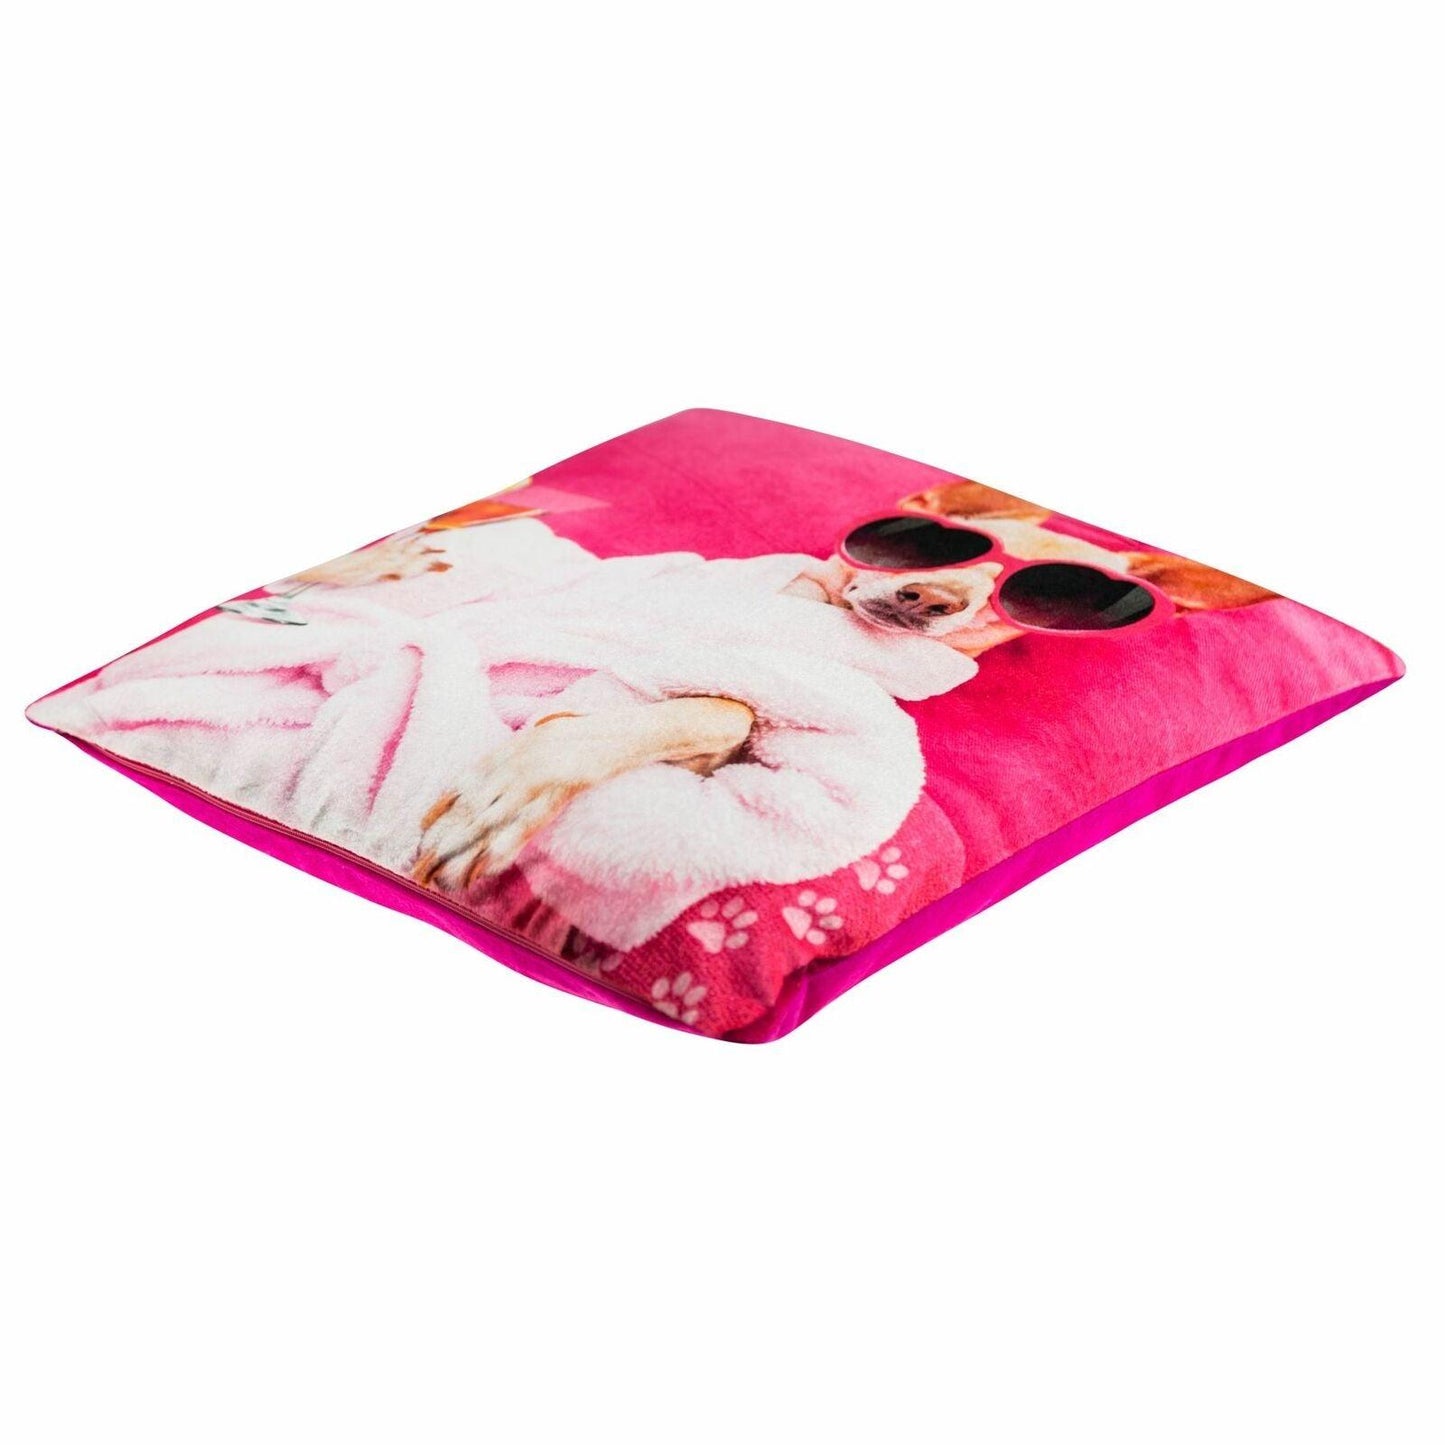 Velvet Dog with Robe Square Cushion Covers 45cm